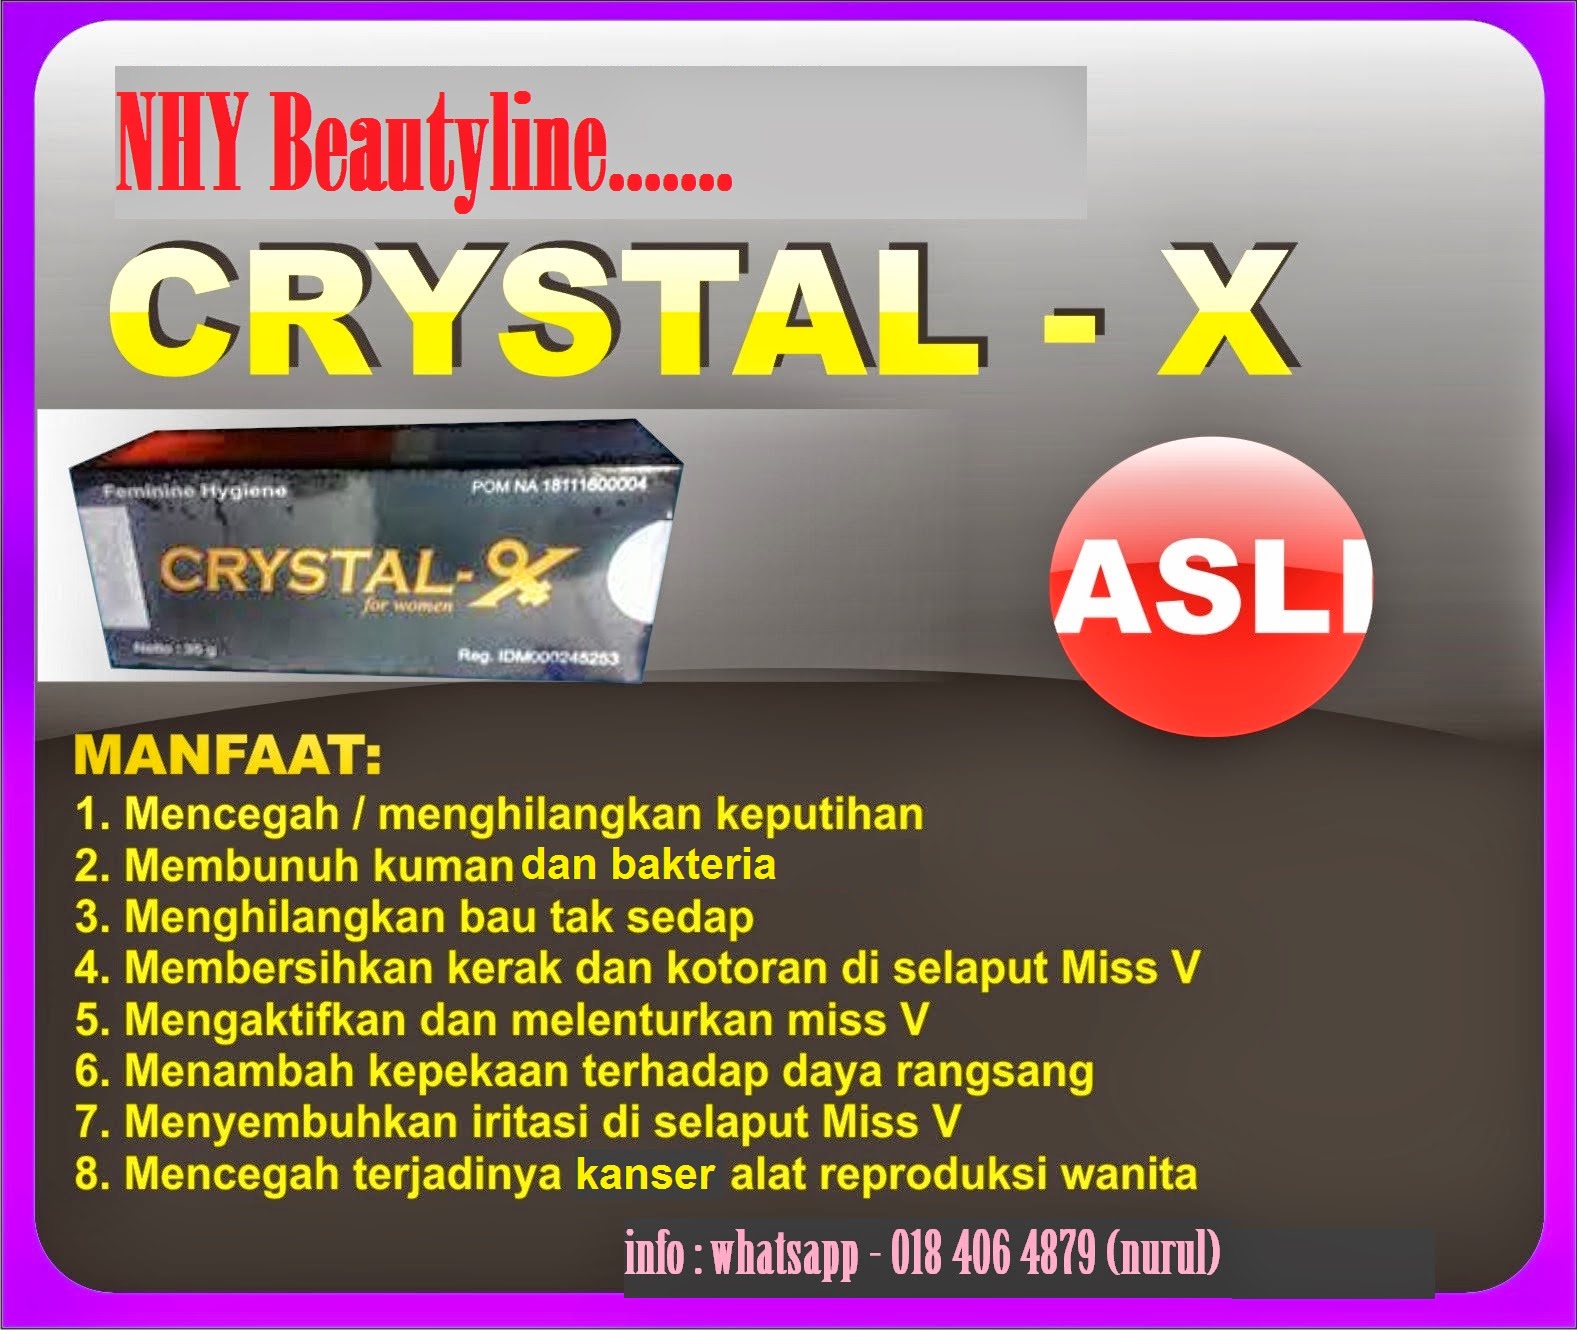 NHY Beautyline: CRYSTAL-X MALAYSIA